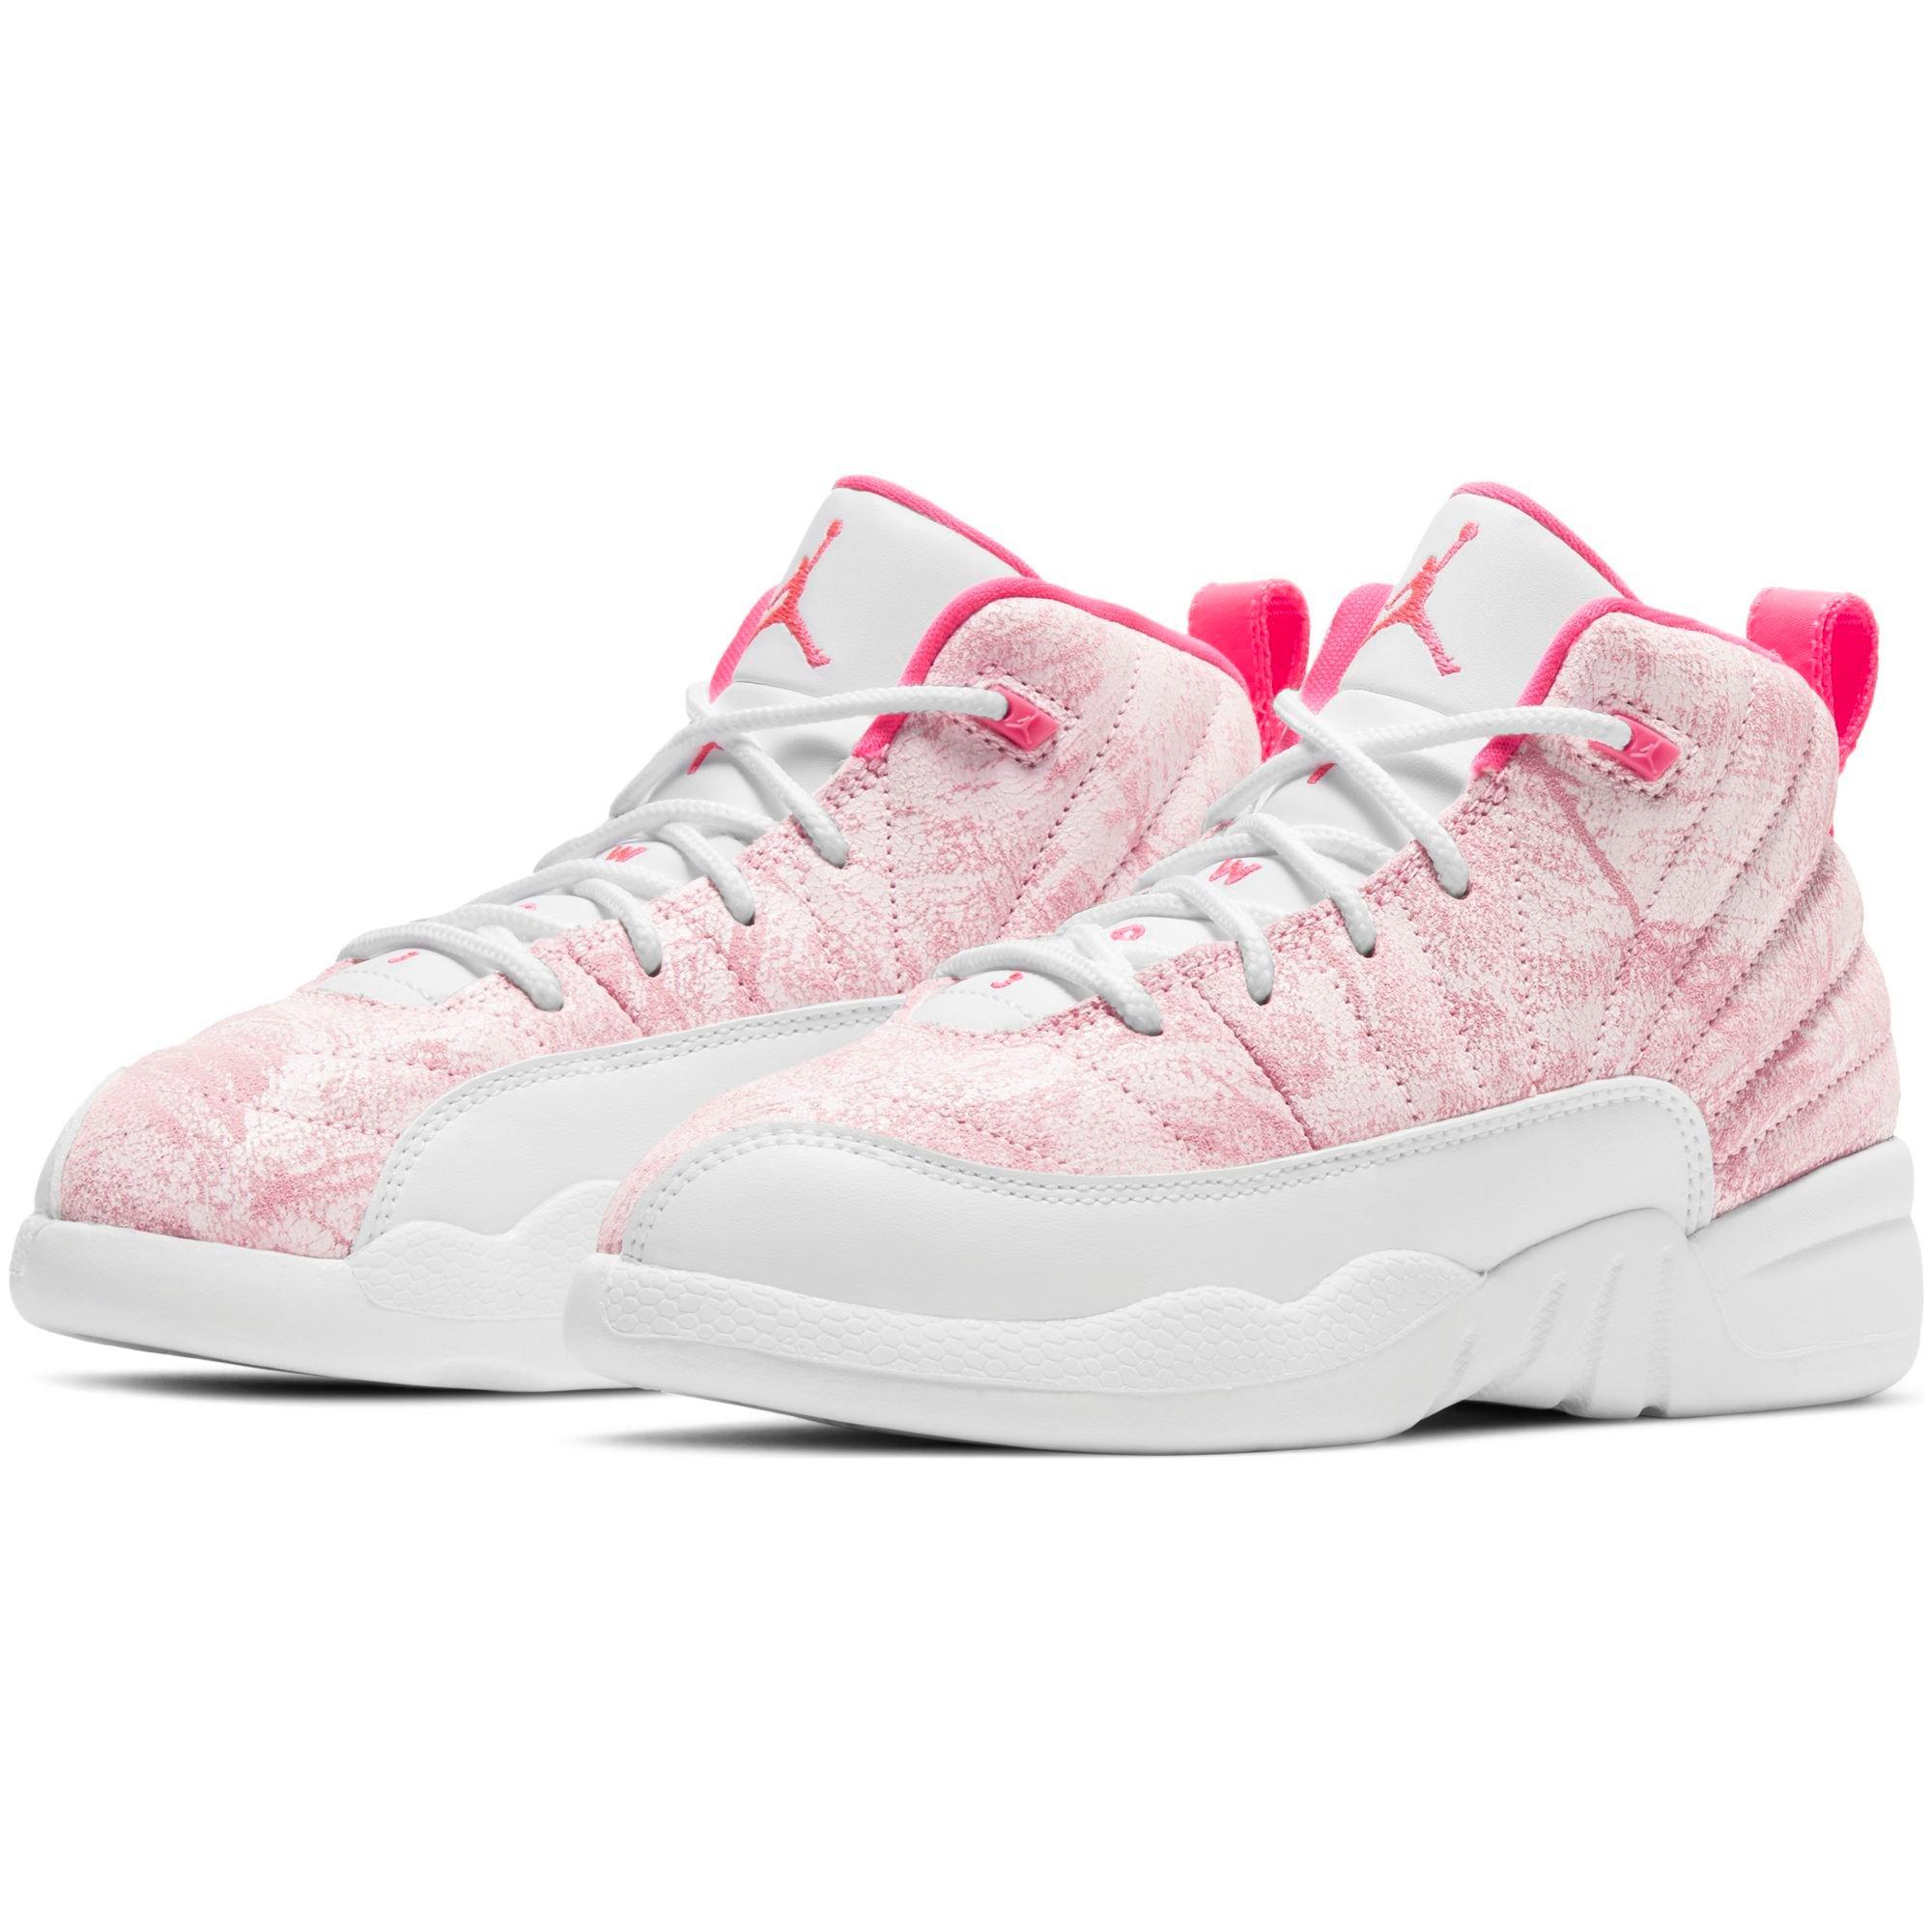 jordans 12 pink and white